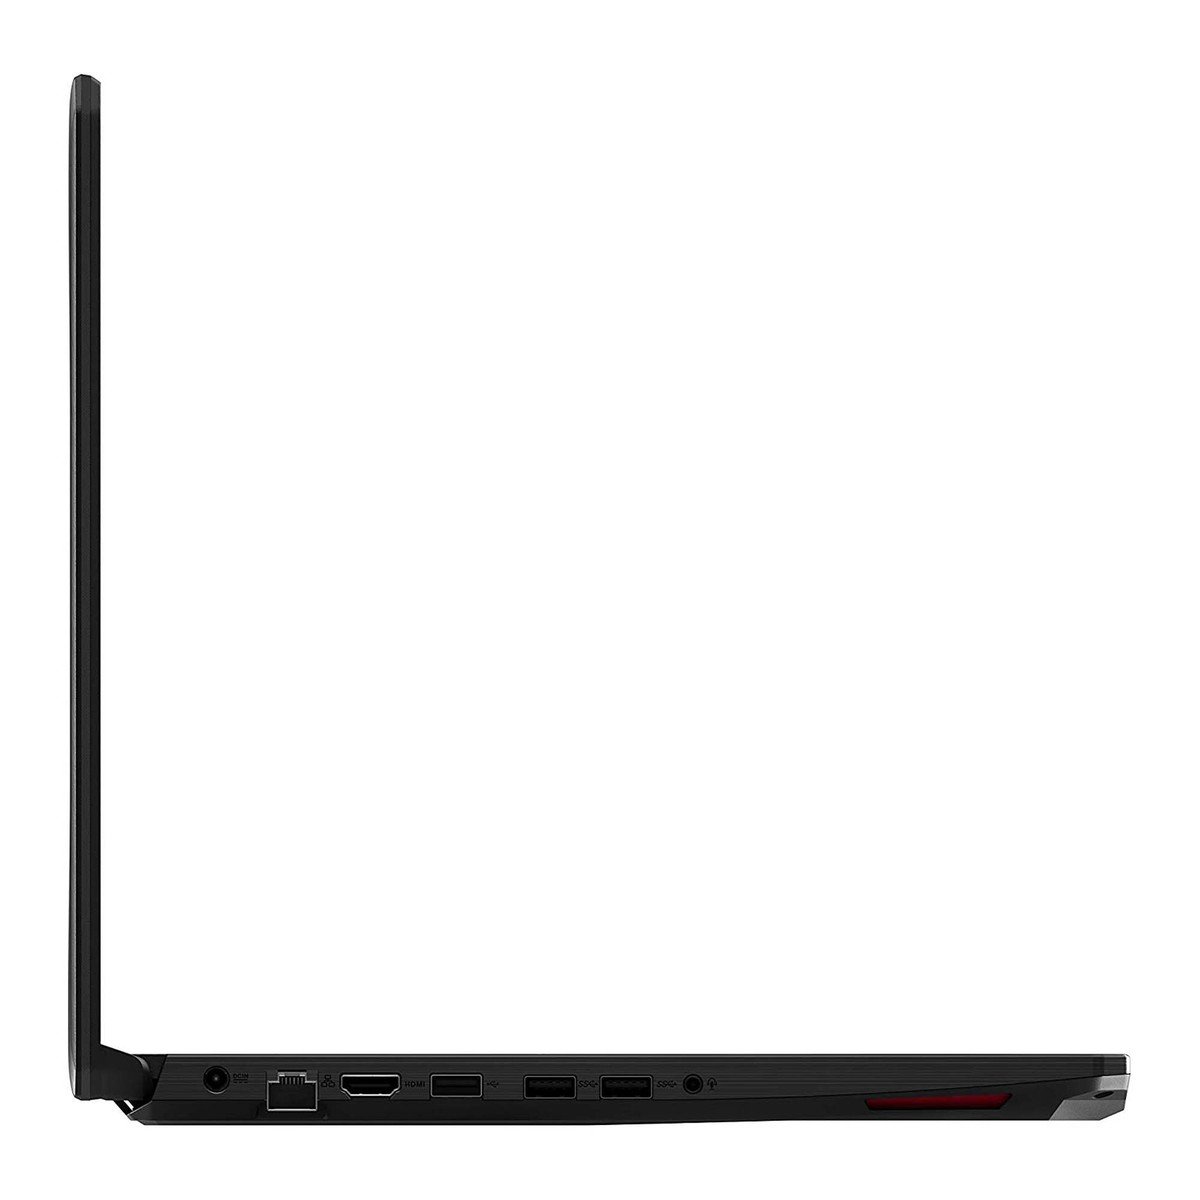 ASUS TUF Gaming FX505DY-BQ024T,15.6-inch FHD Laptop,(AMD Ryzen 5-3550H/8GB RAM/512GB NVMe SSD/Windows 10/Radeon RX 560X 4GB Graphics), Black Plastic